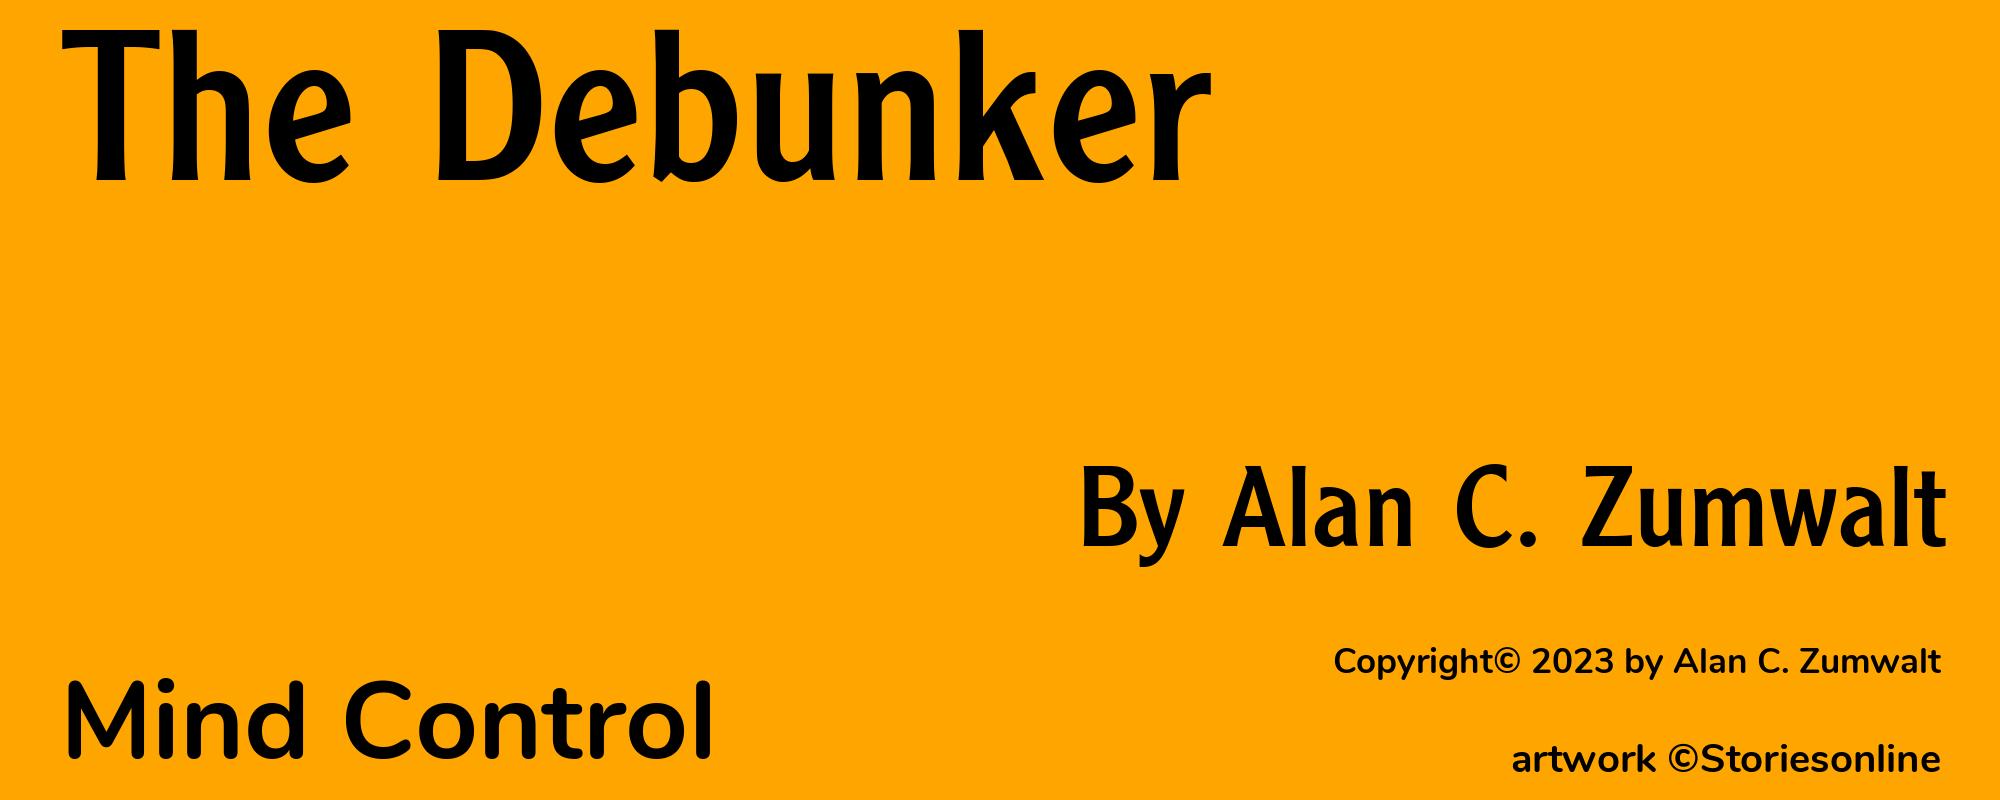 The Debunker - Cover